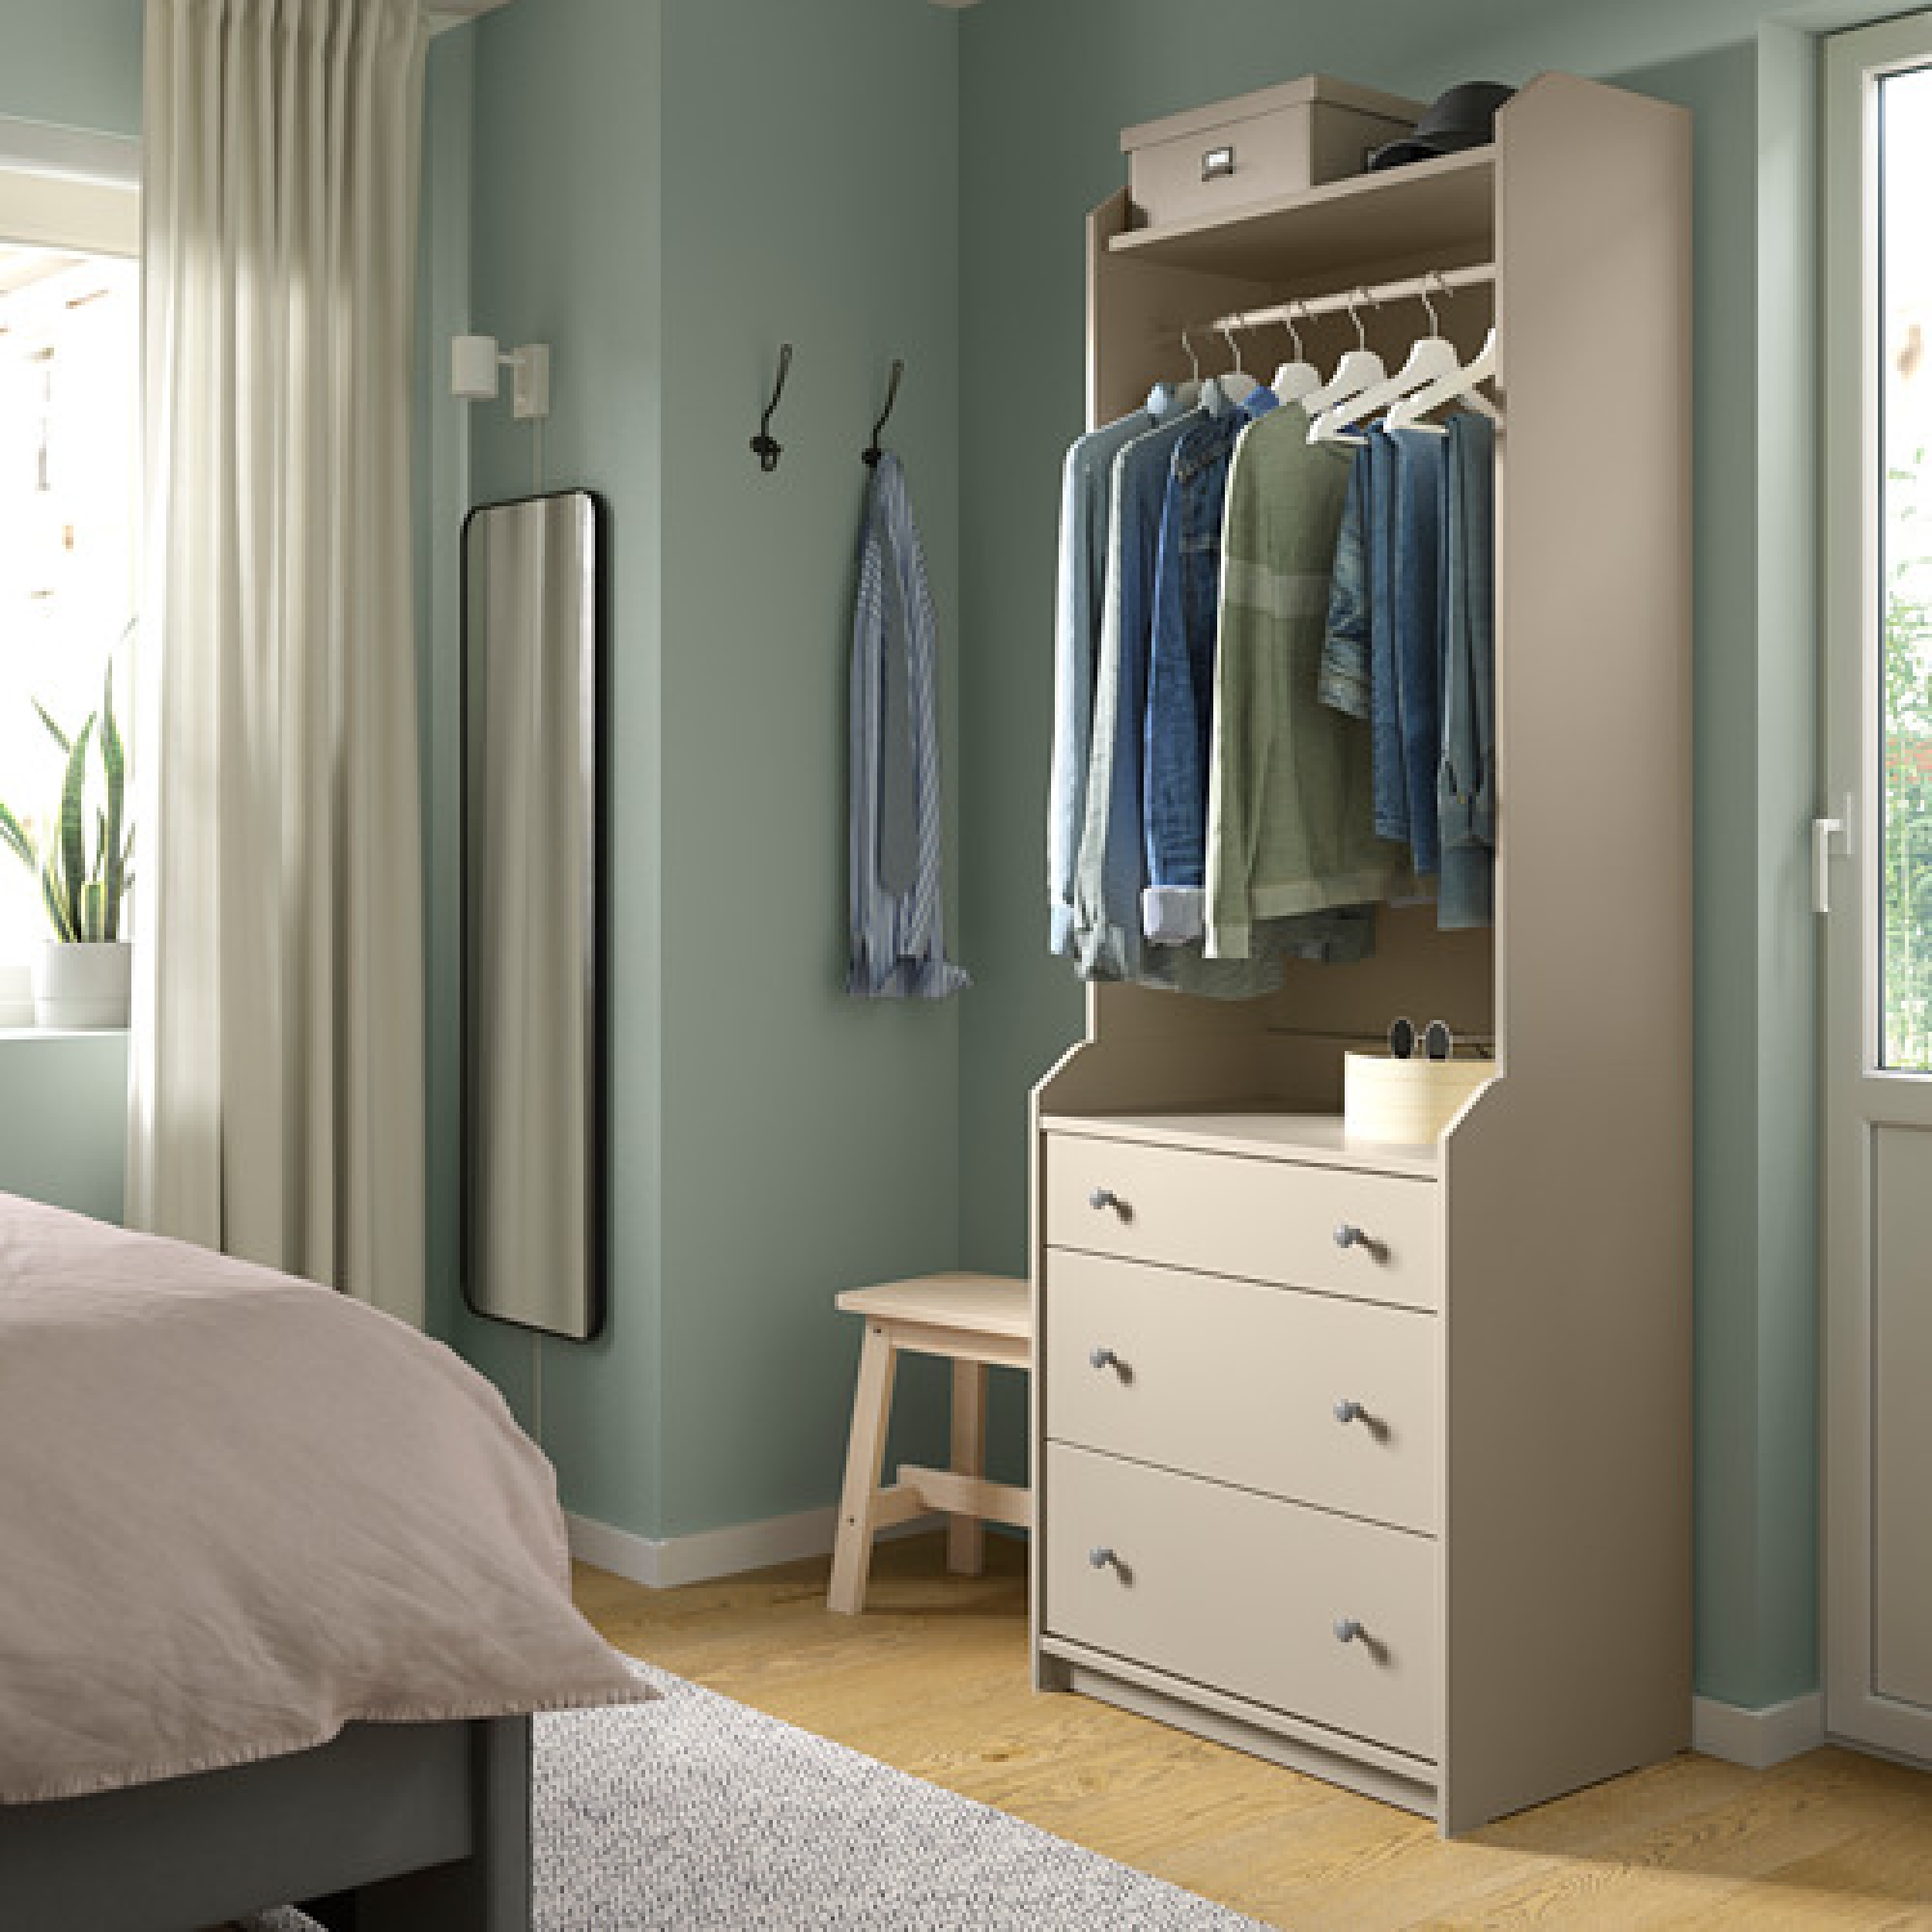 HAUGA open wardrobe with 3 drawers